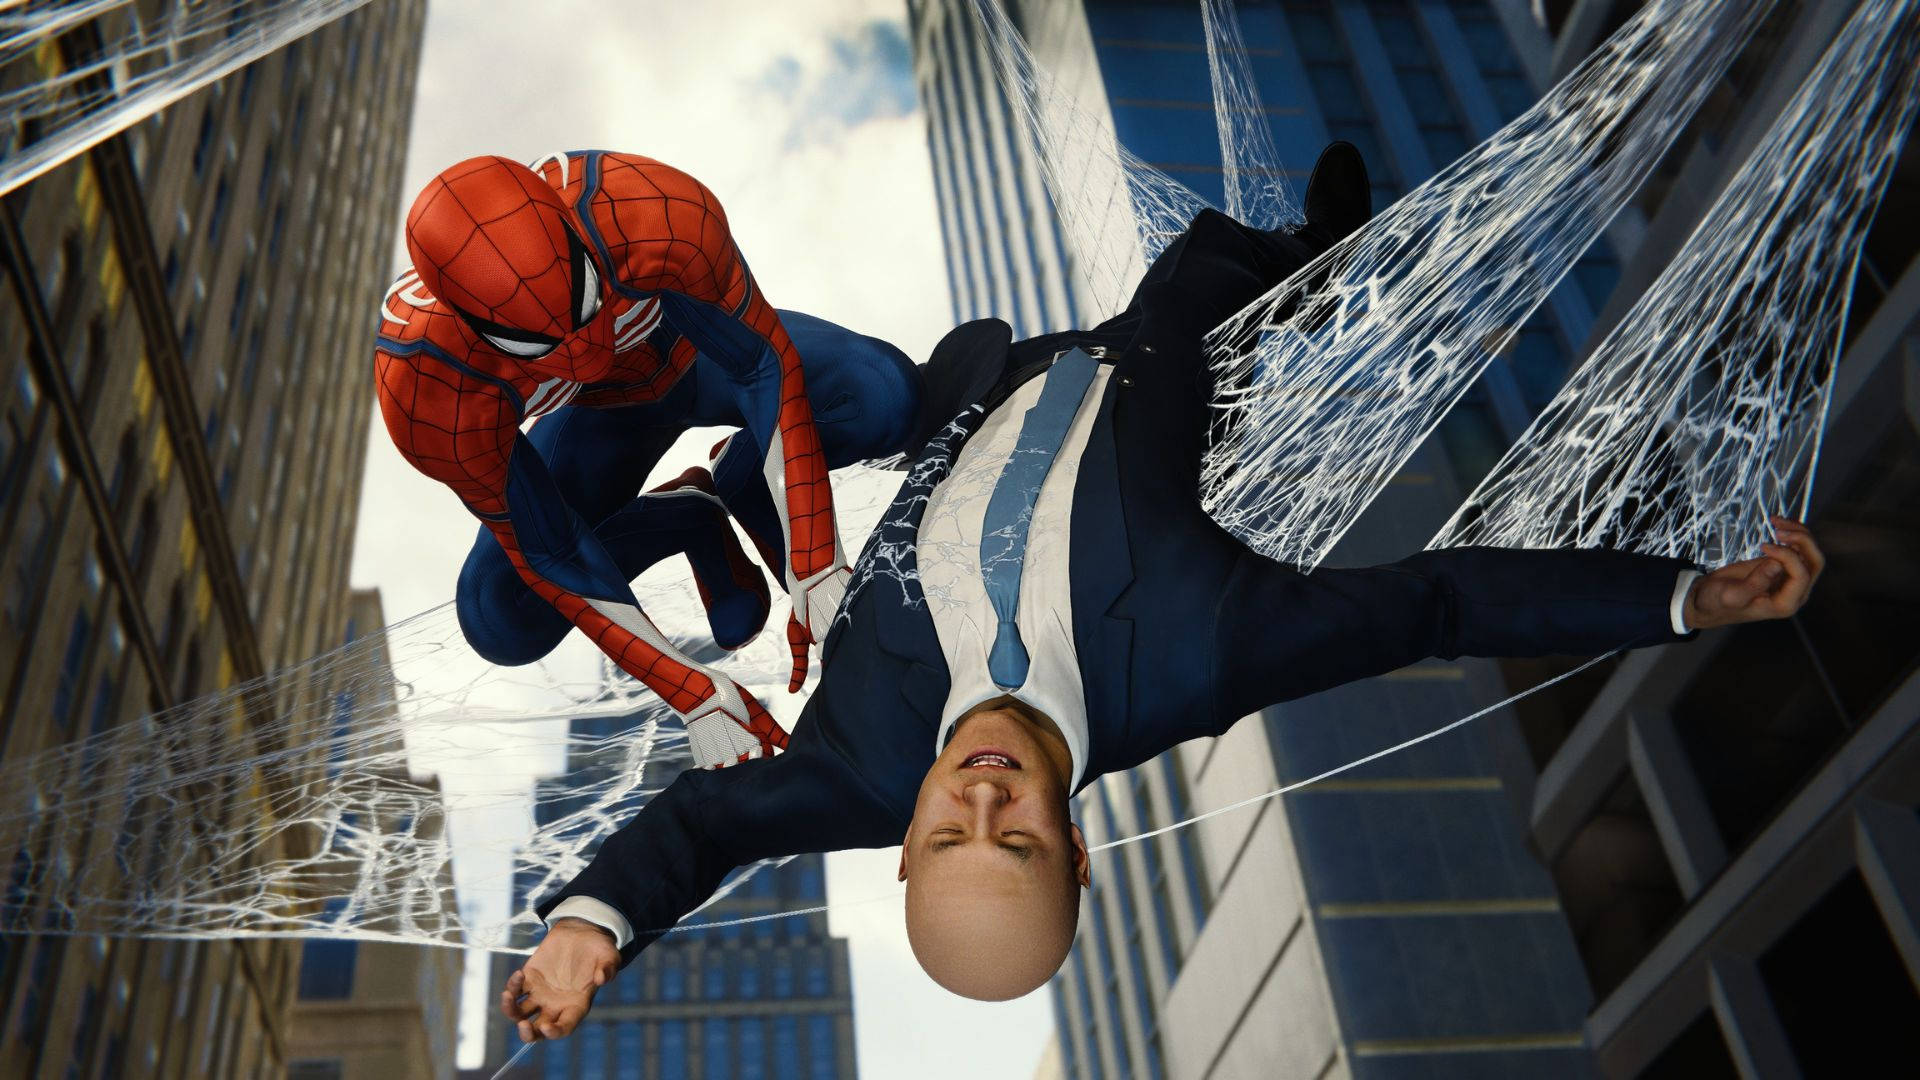 4k Spiderman Saving A Man Wallpaper